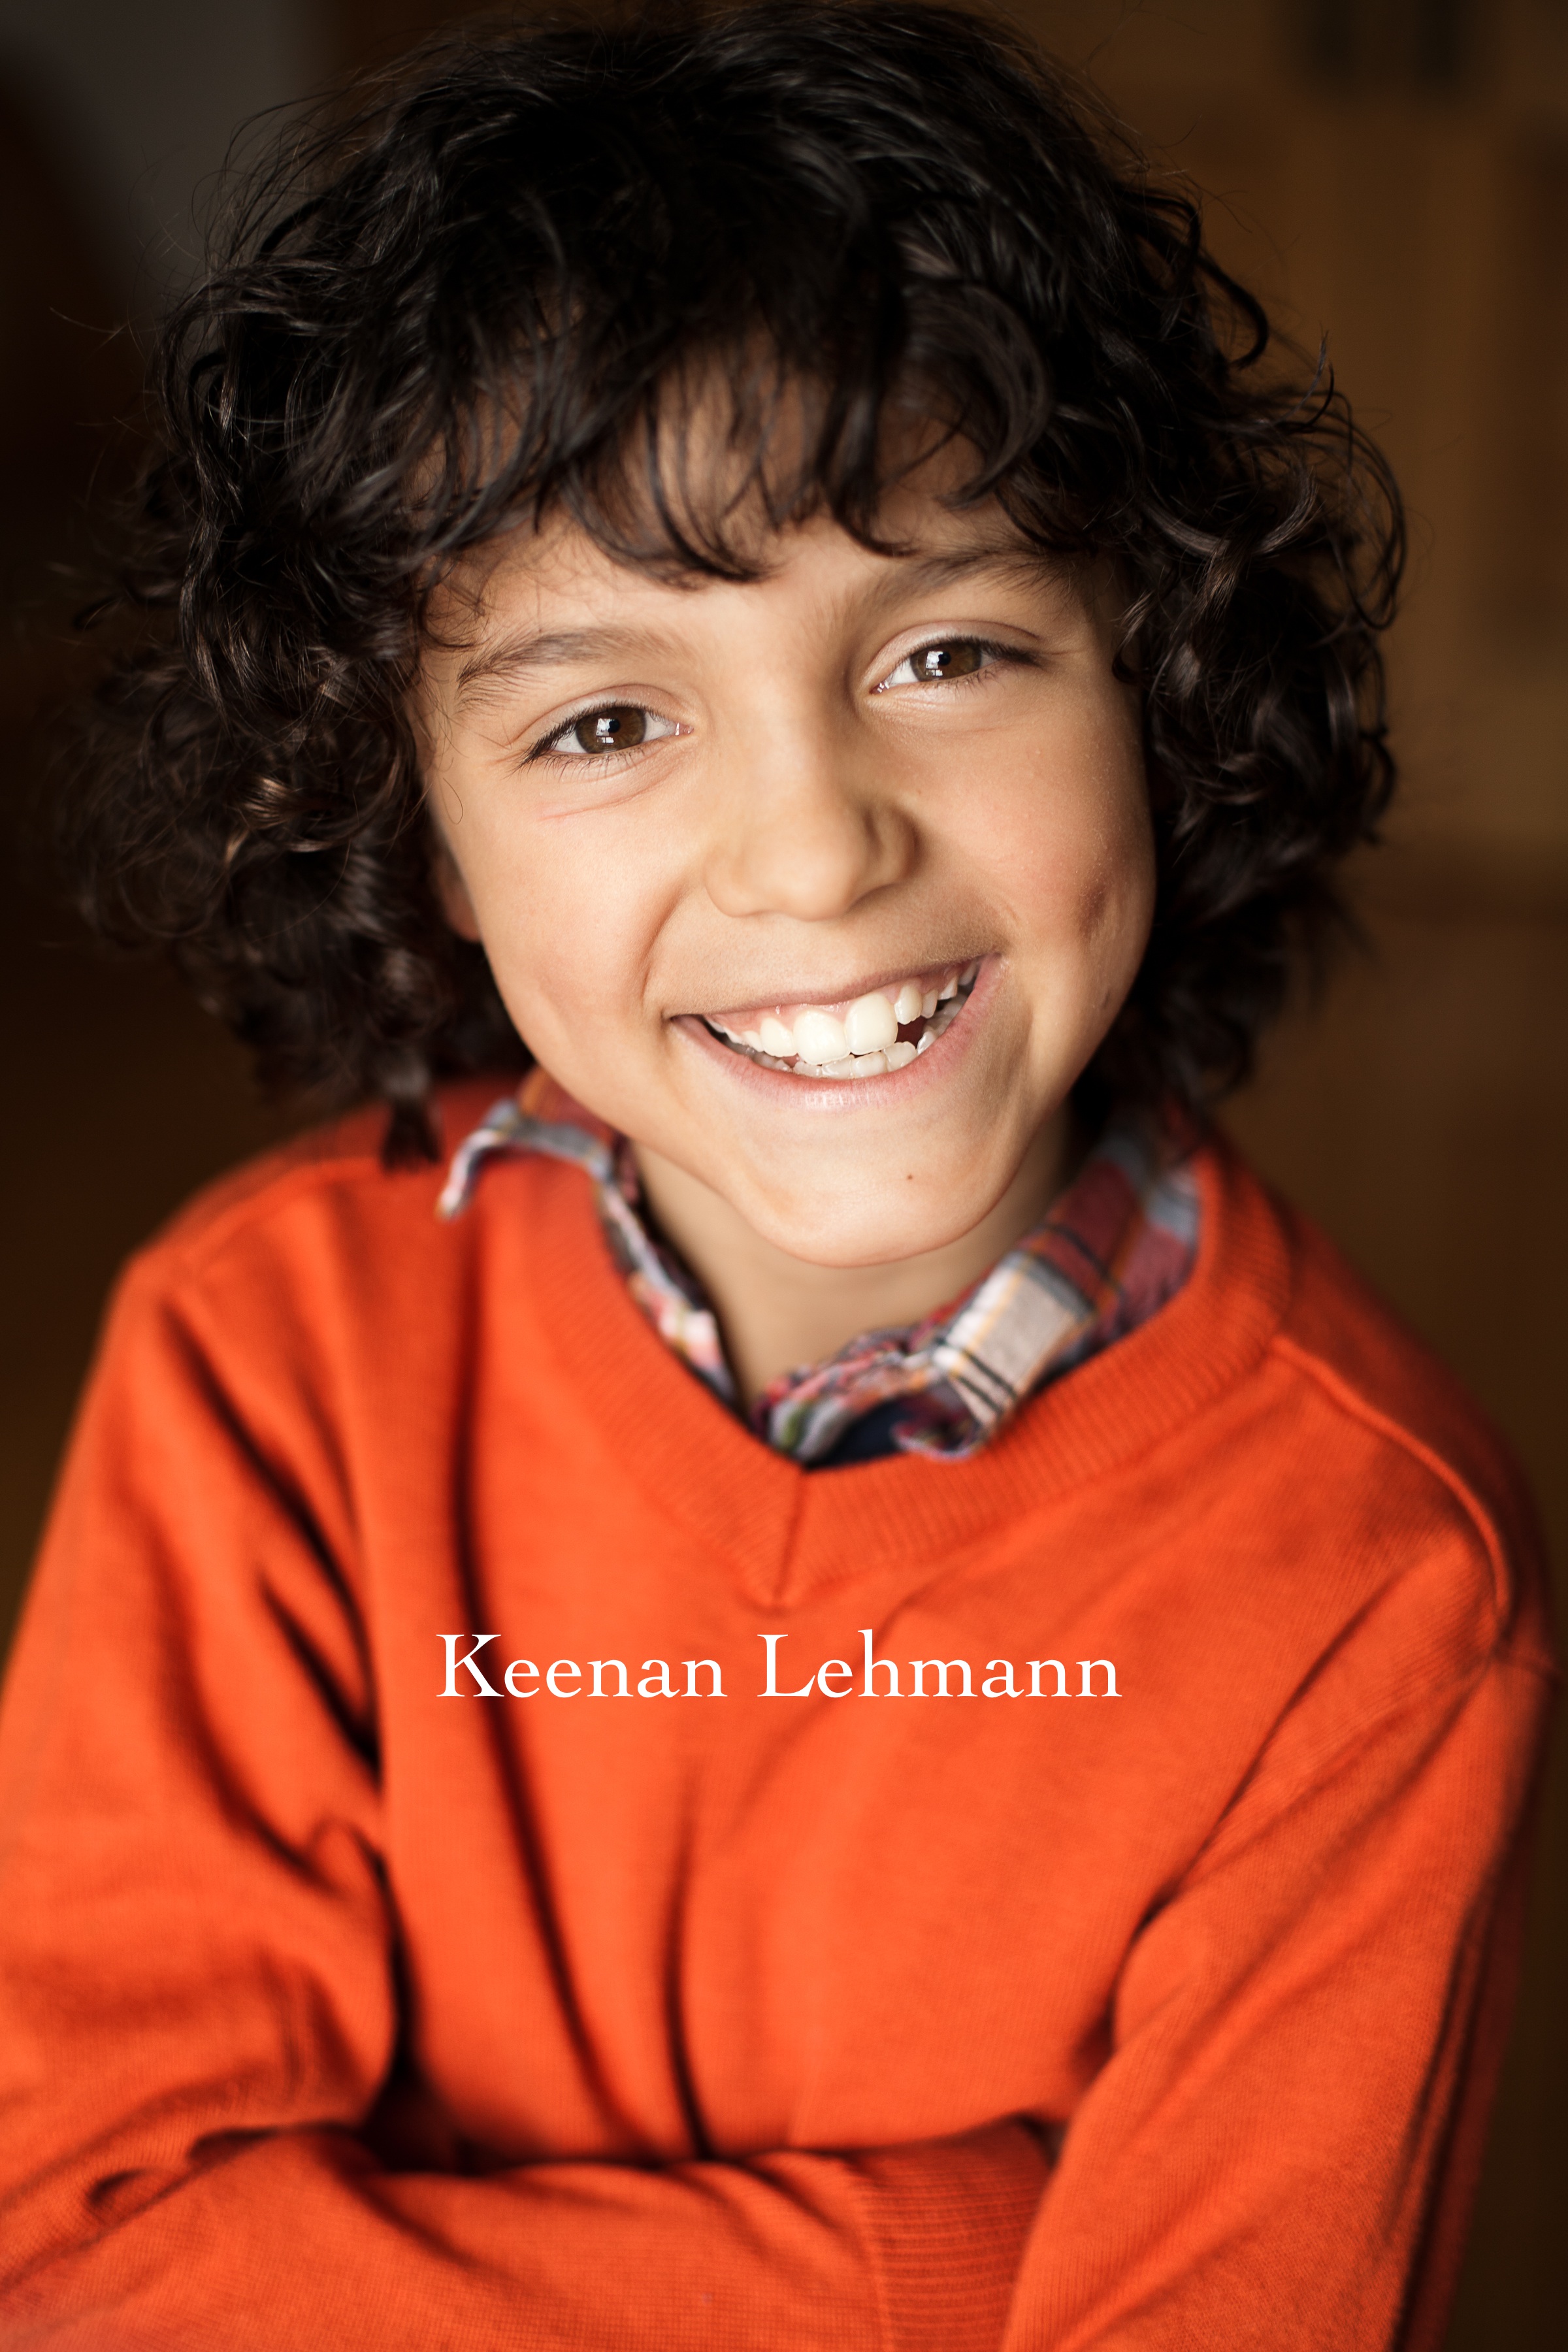 Keenan Lehmann 9 yrs old 2014